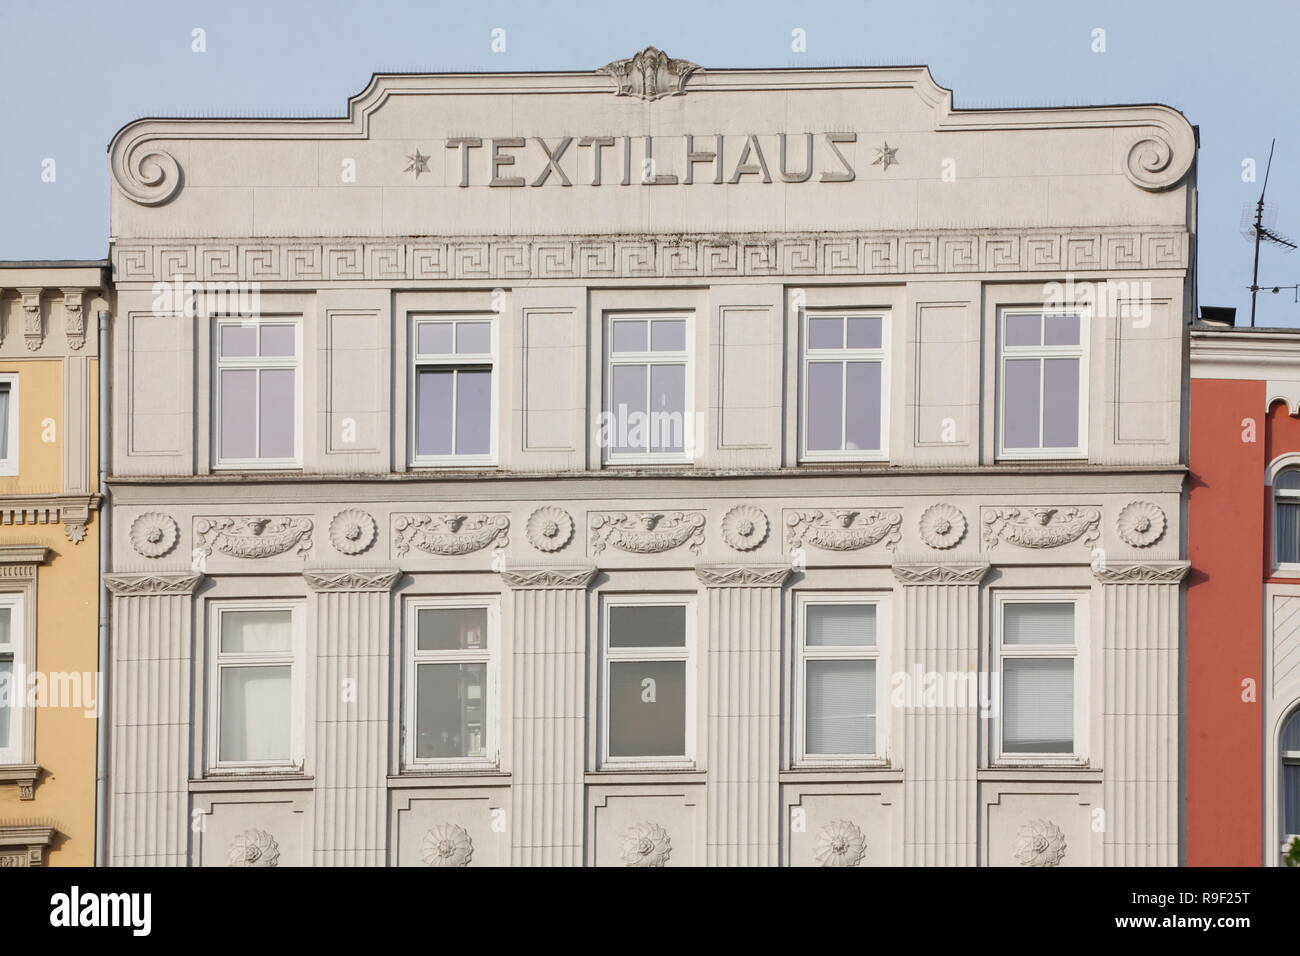 Fachada de la casa histórica casa textiles en el St. Georg Straße, distrito de St. Georg, Hamburgo, Alemania, Europa I Historische Hausfassade Textilhaus i Foto de stock